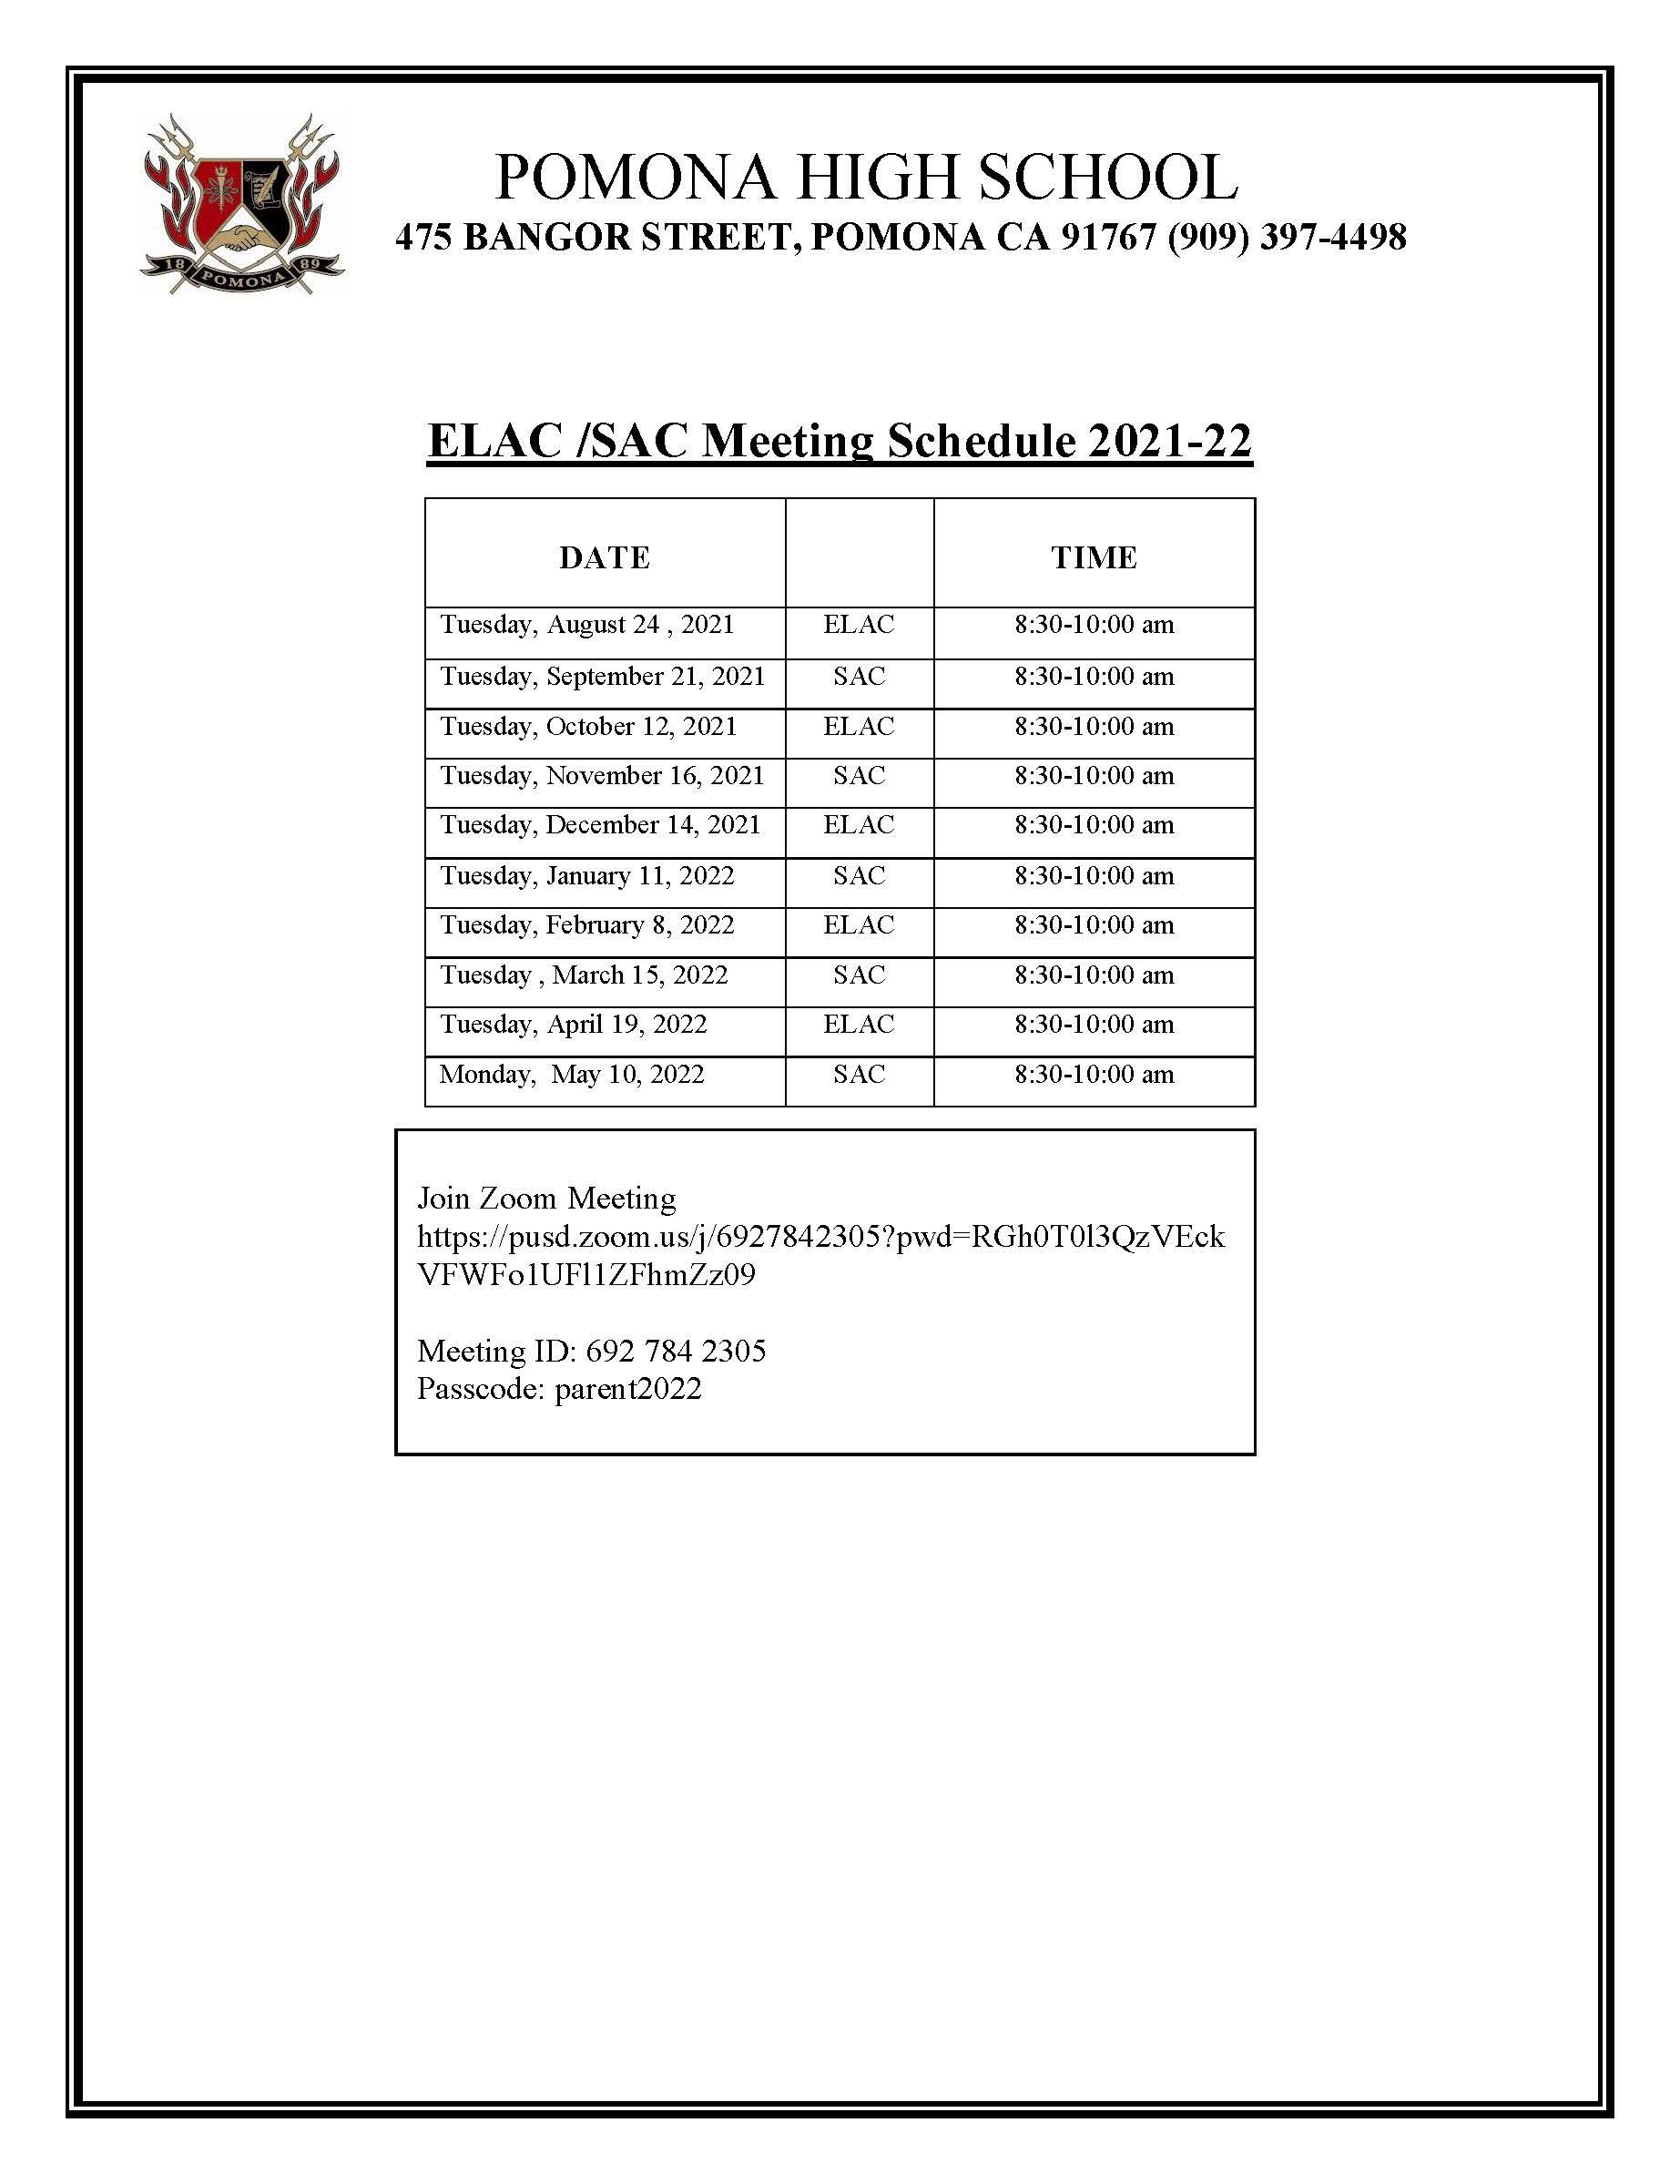 ELACSAC Meetings Calendar 202122 Pomona High School